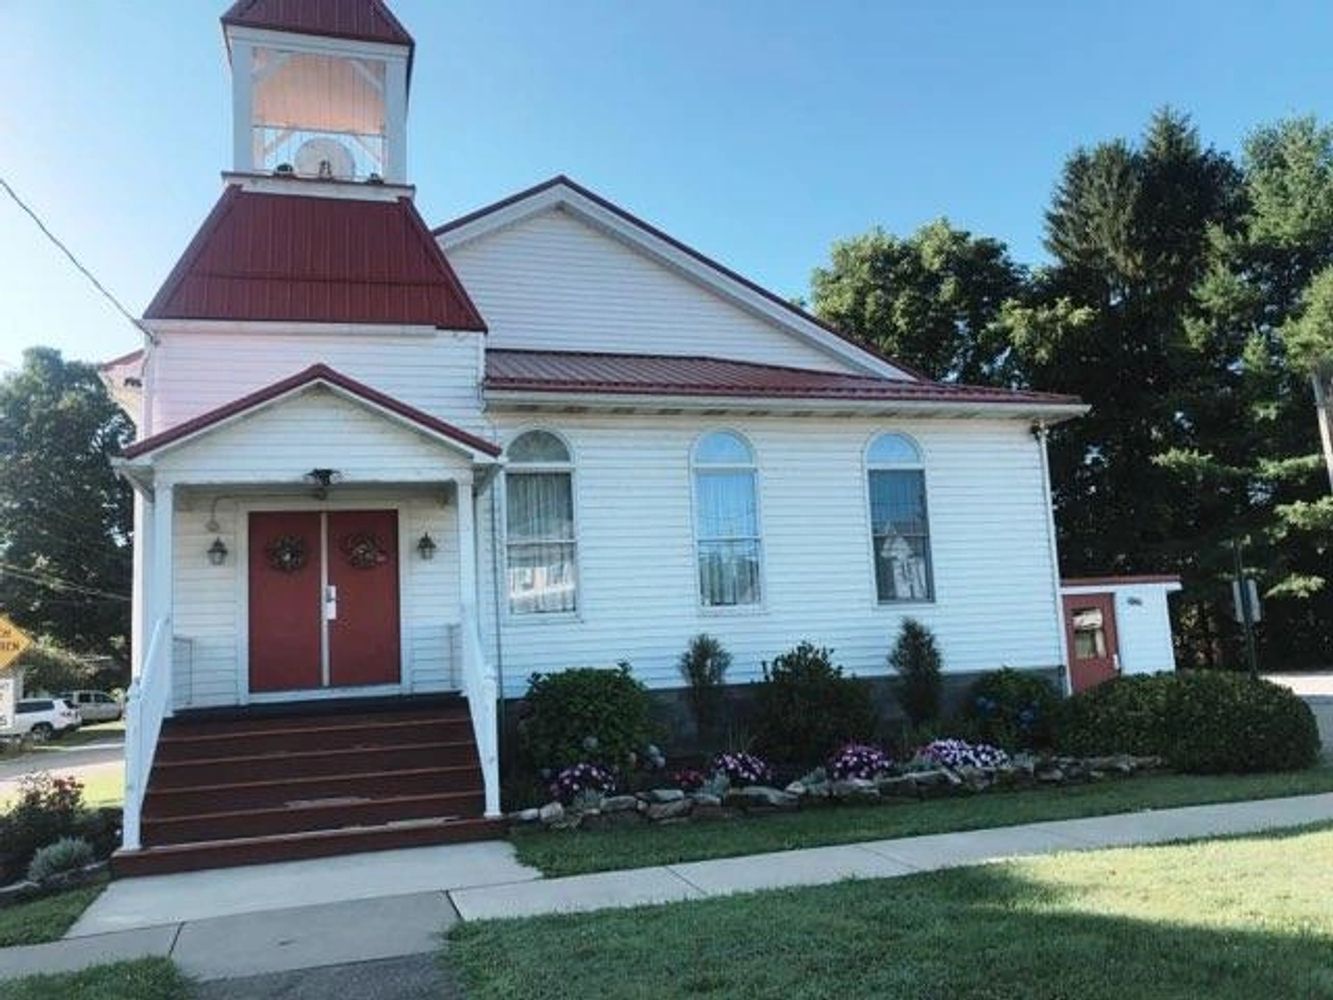 Find a church, Churches near Franklin Pa, church in Franklin Pa, Polk Presbyterian Church, Christian